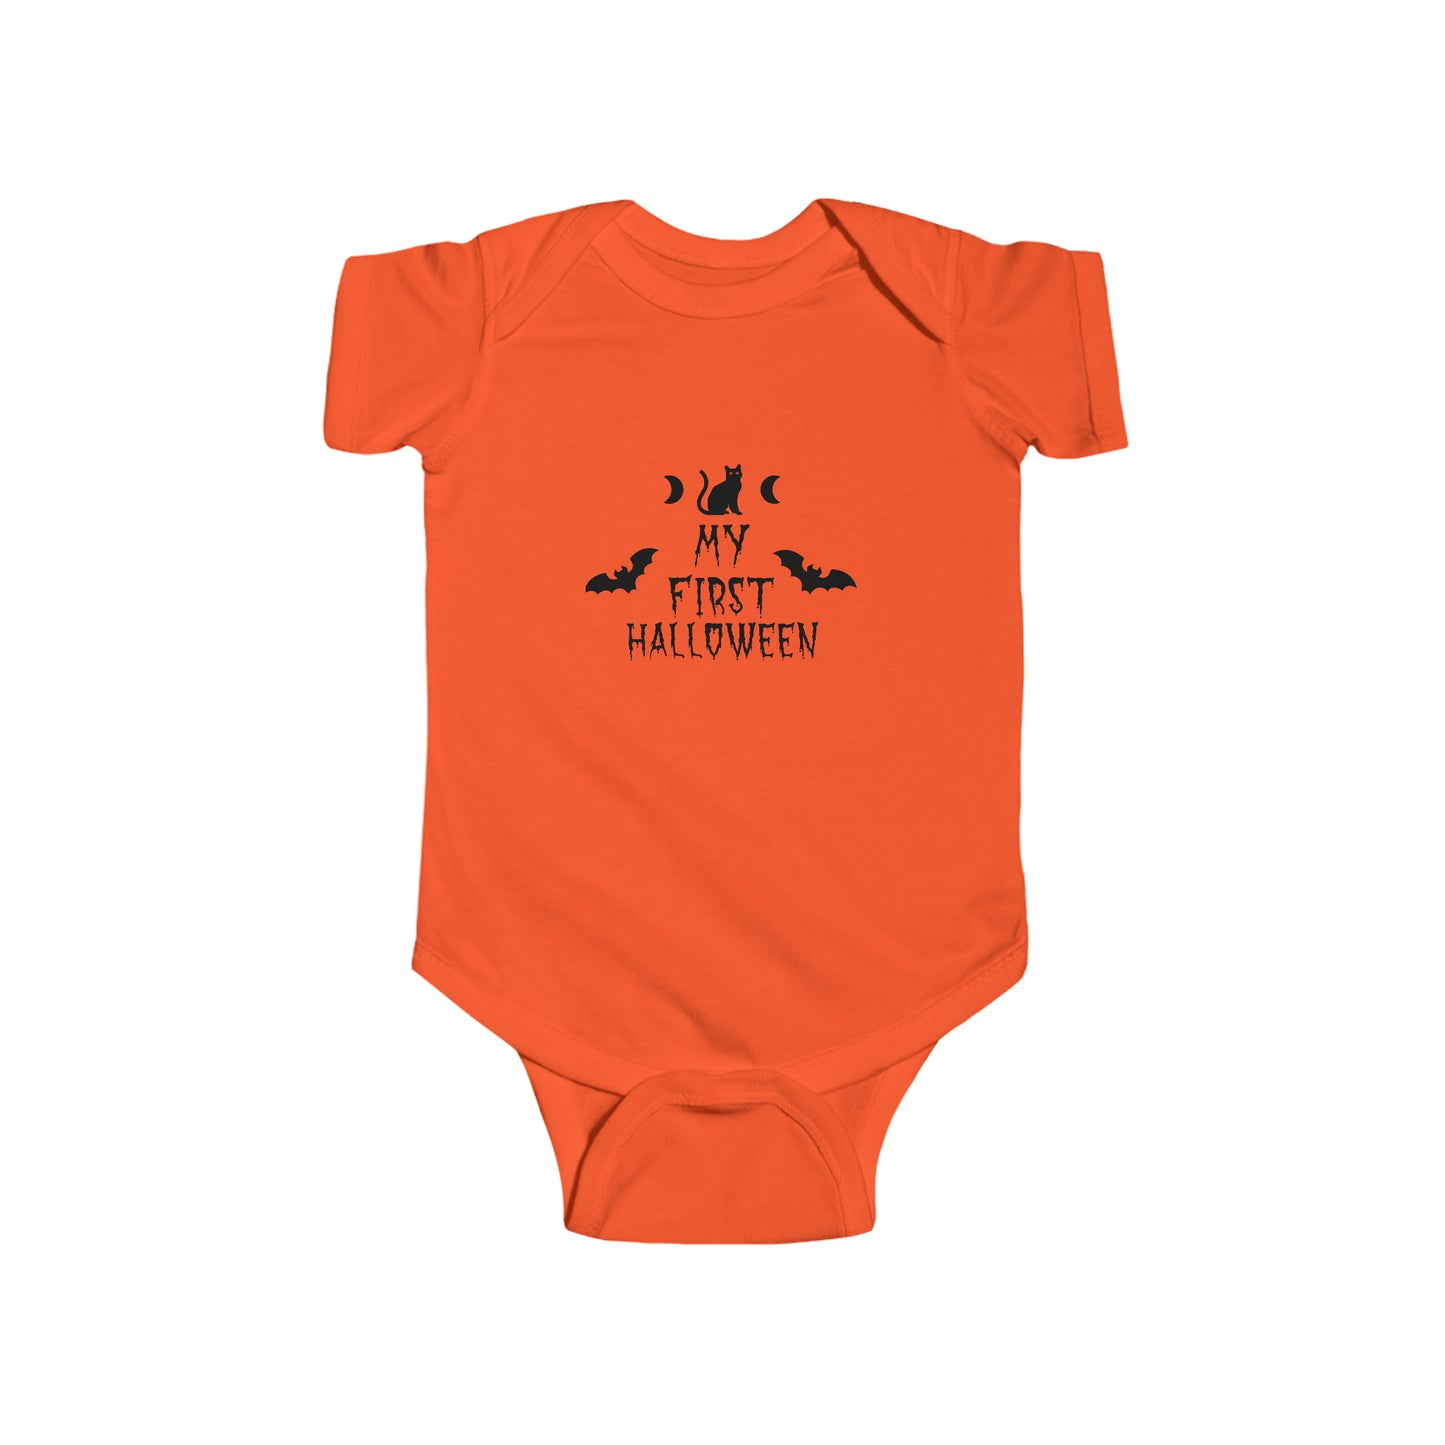 "My first halloween" Infant Fine Jersey Bodysuit